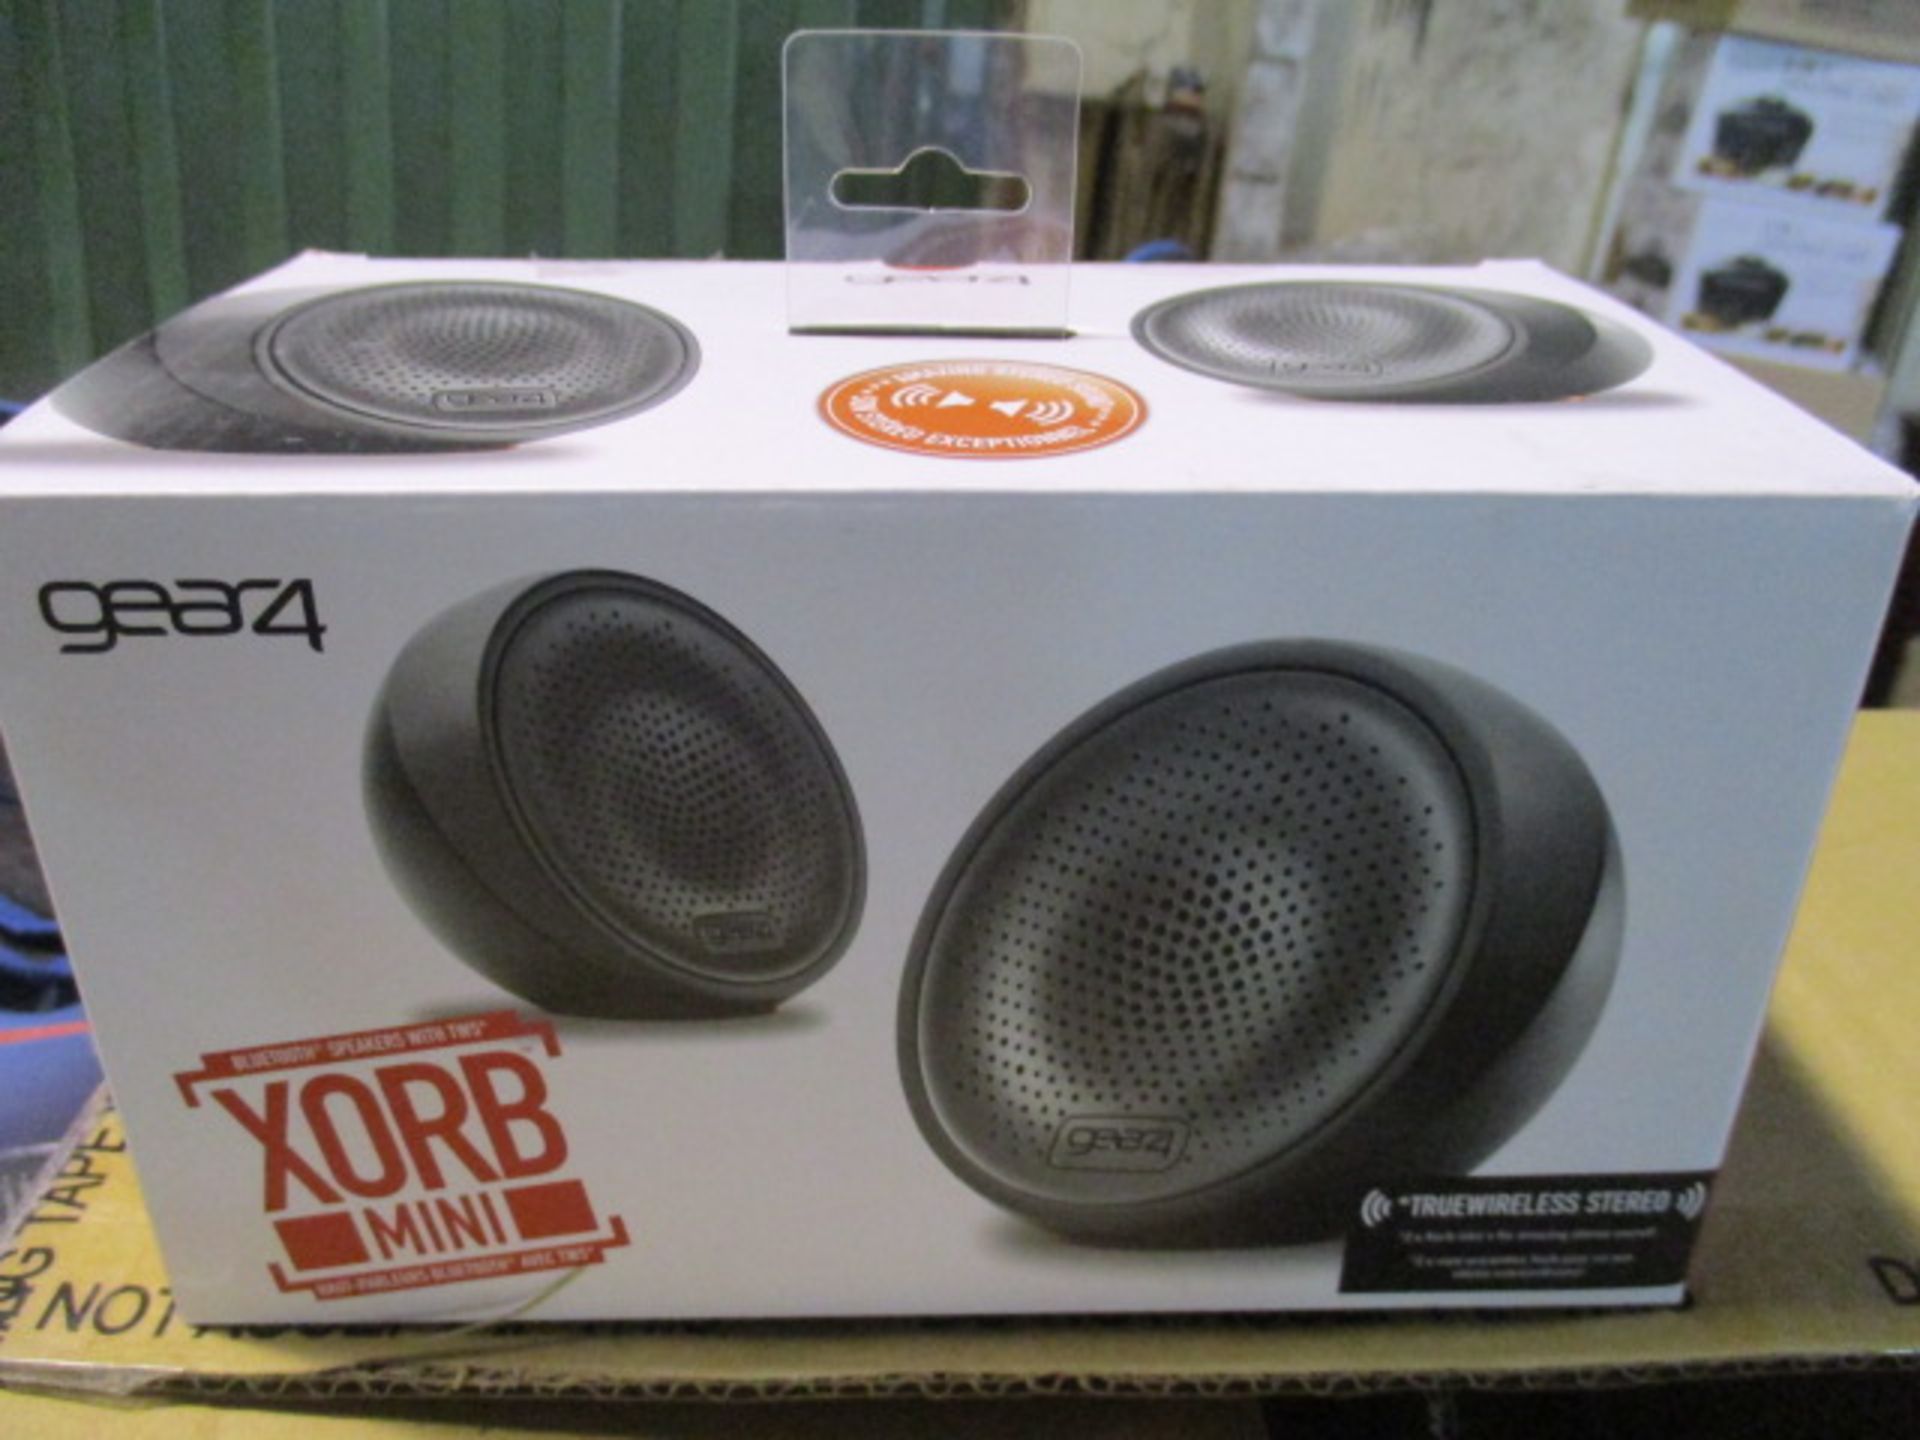 10pcs in lot Brand new sealed Gear 4 Xorb wireless bluetooth speakers - rrp appx £33 each set - 10